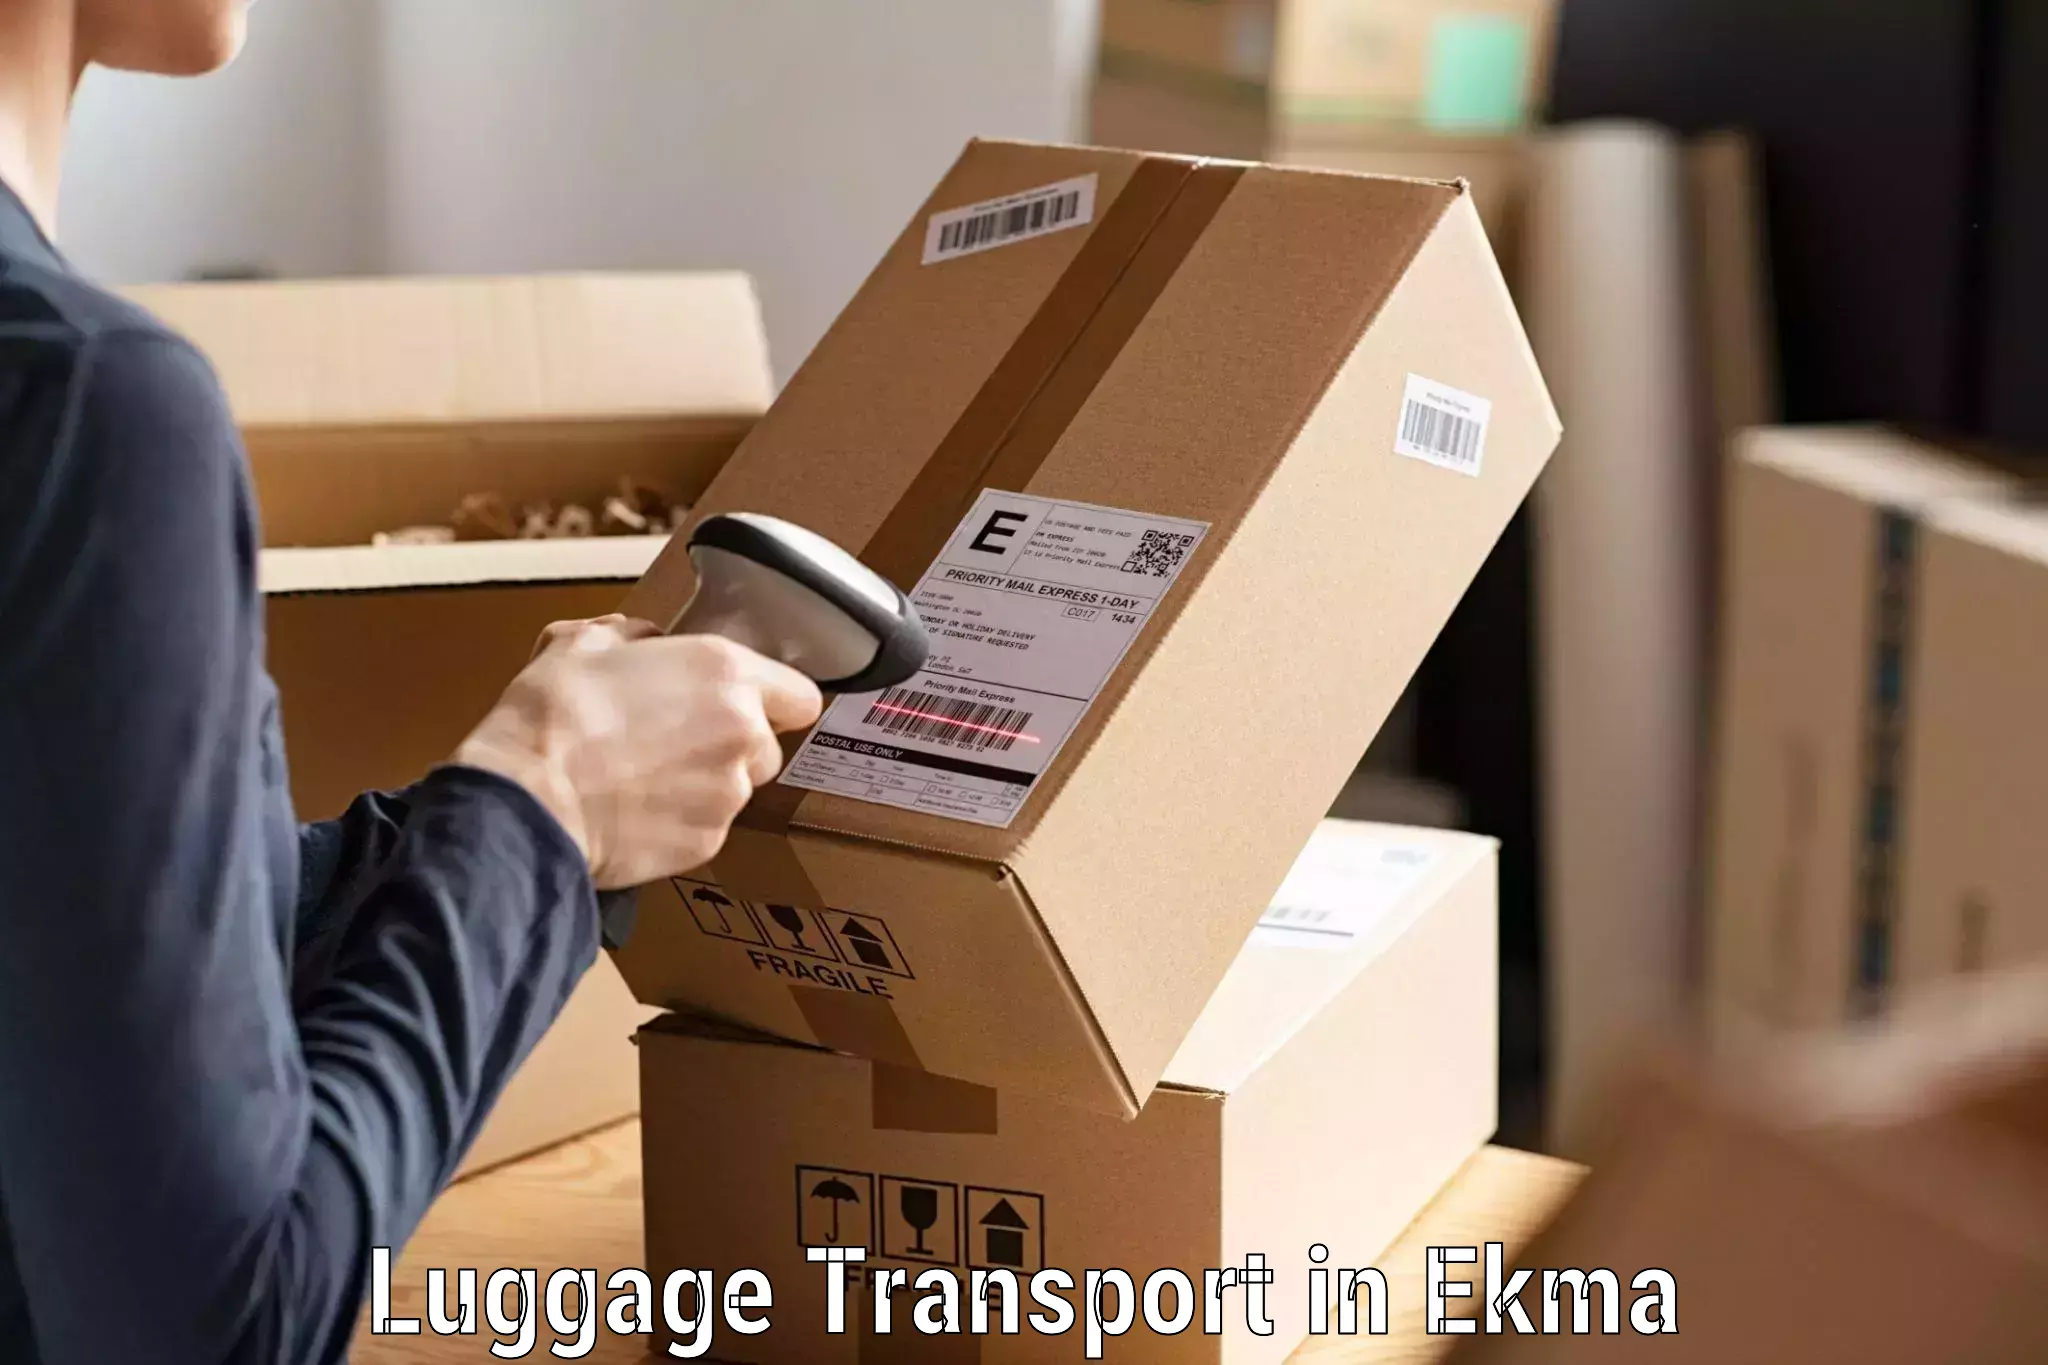 Luggage transfer service in Ekma